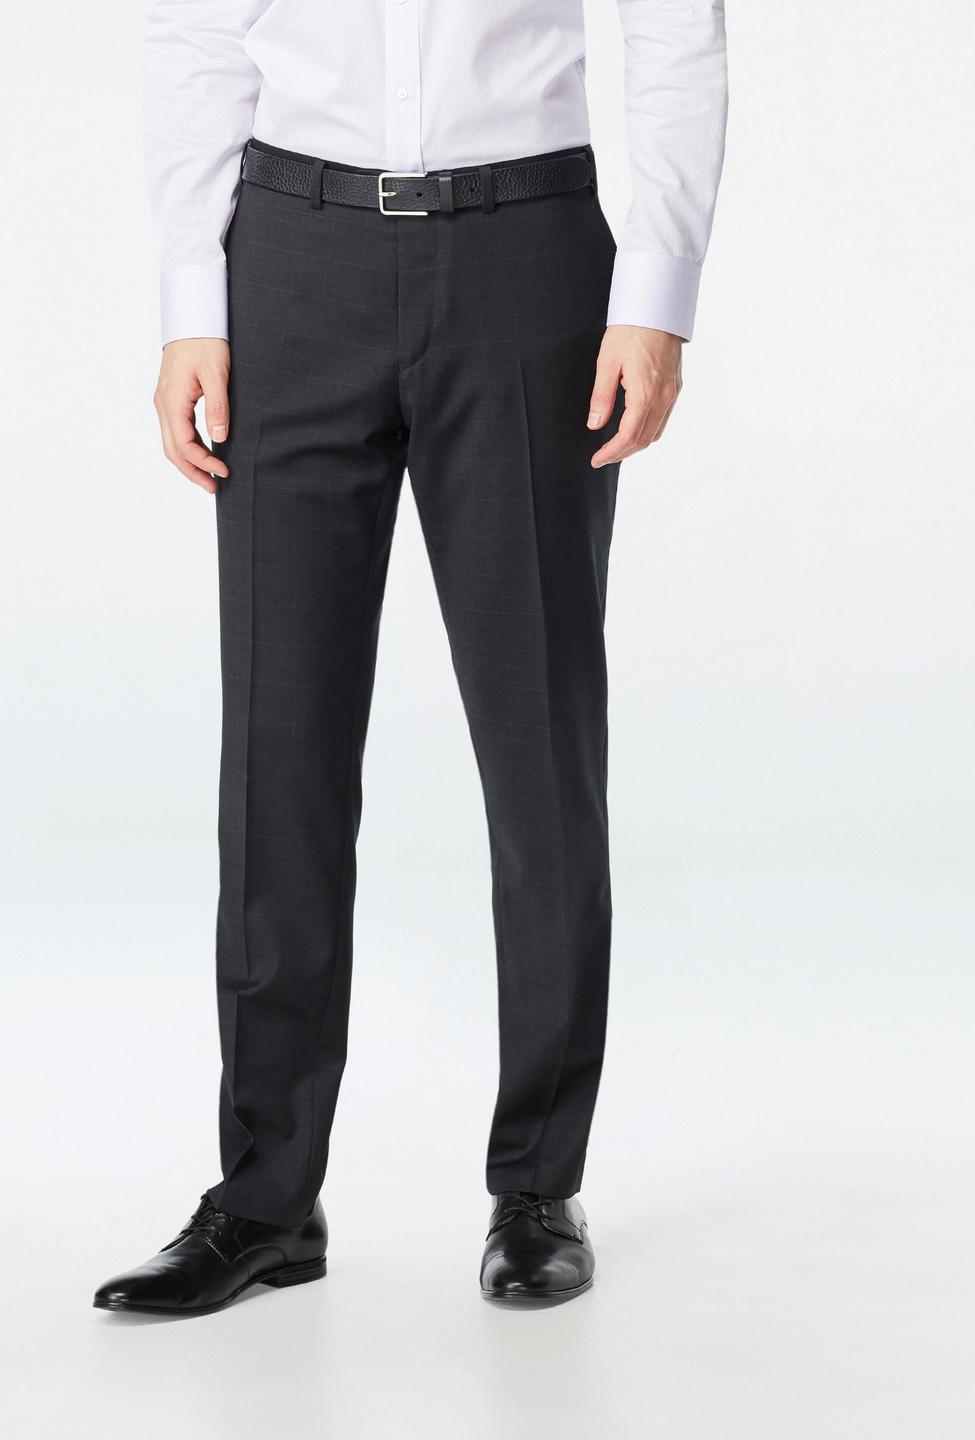 Black pants - Hemsworth Plaid Design from Premium Indochino Collection